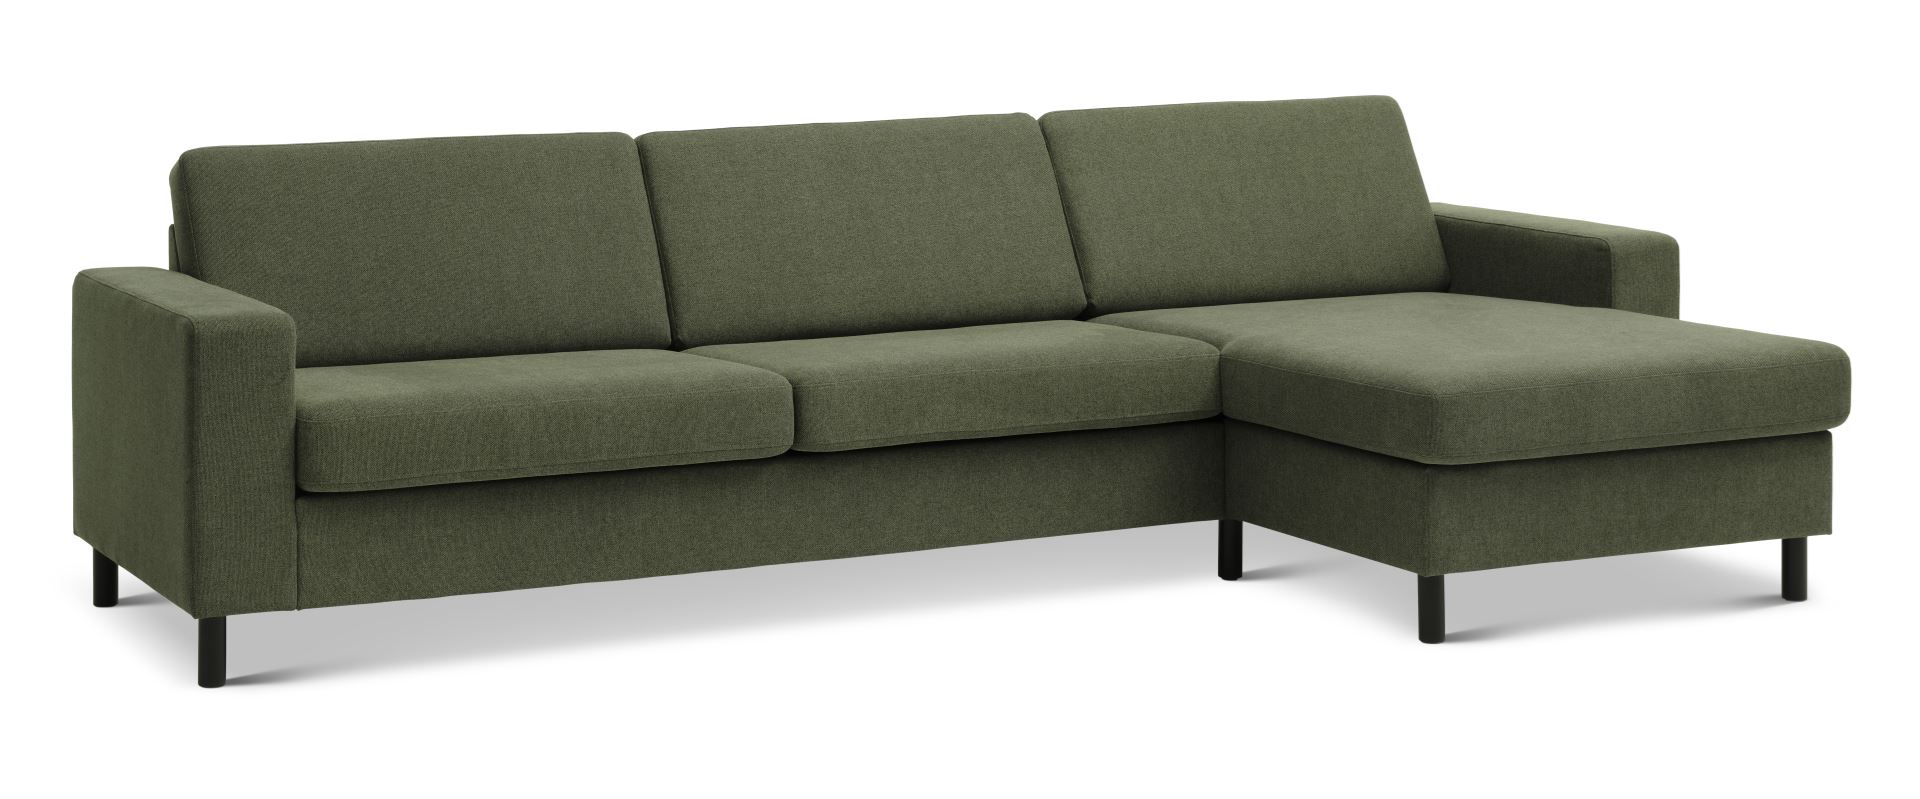 Pan set 8 3D XL sofa, m. chaiselong - vinter mosgrøn polyester stof og sort træ